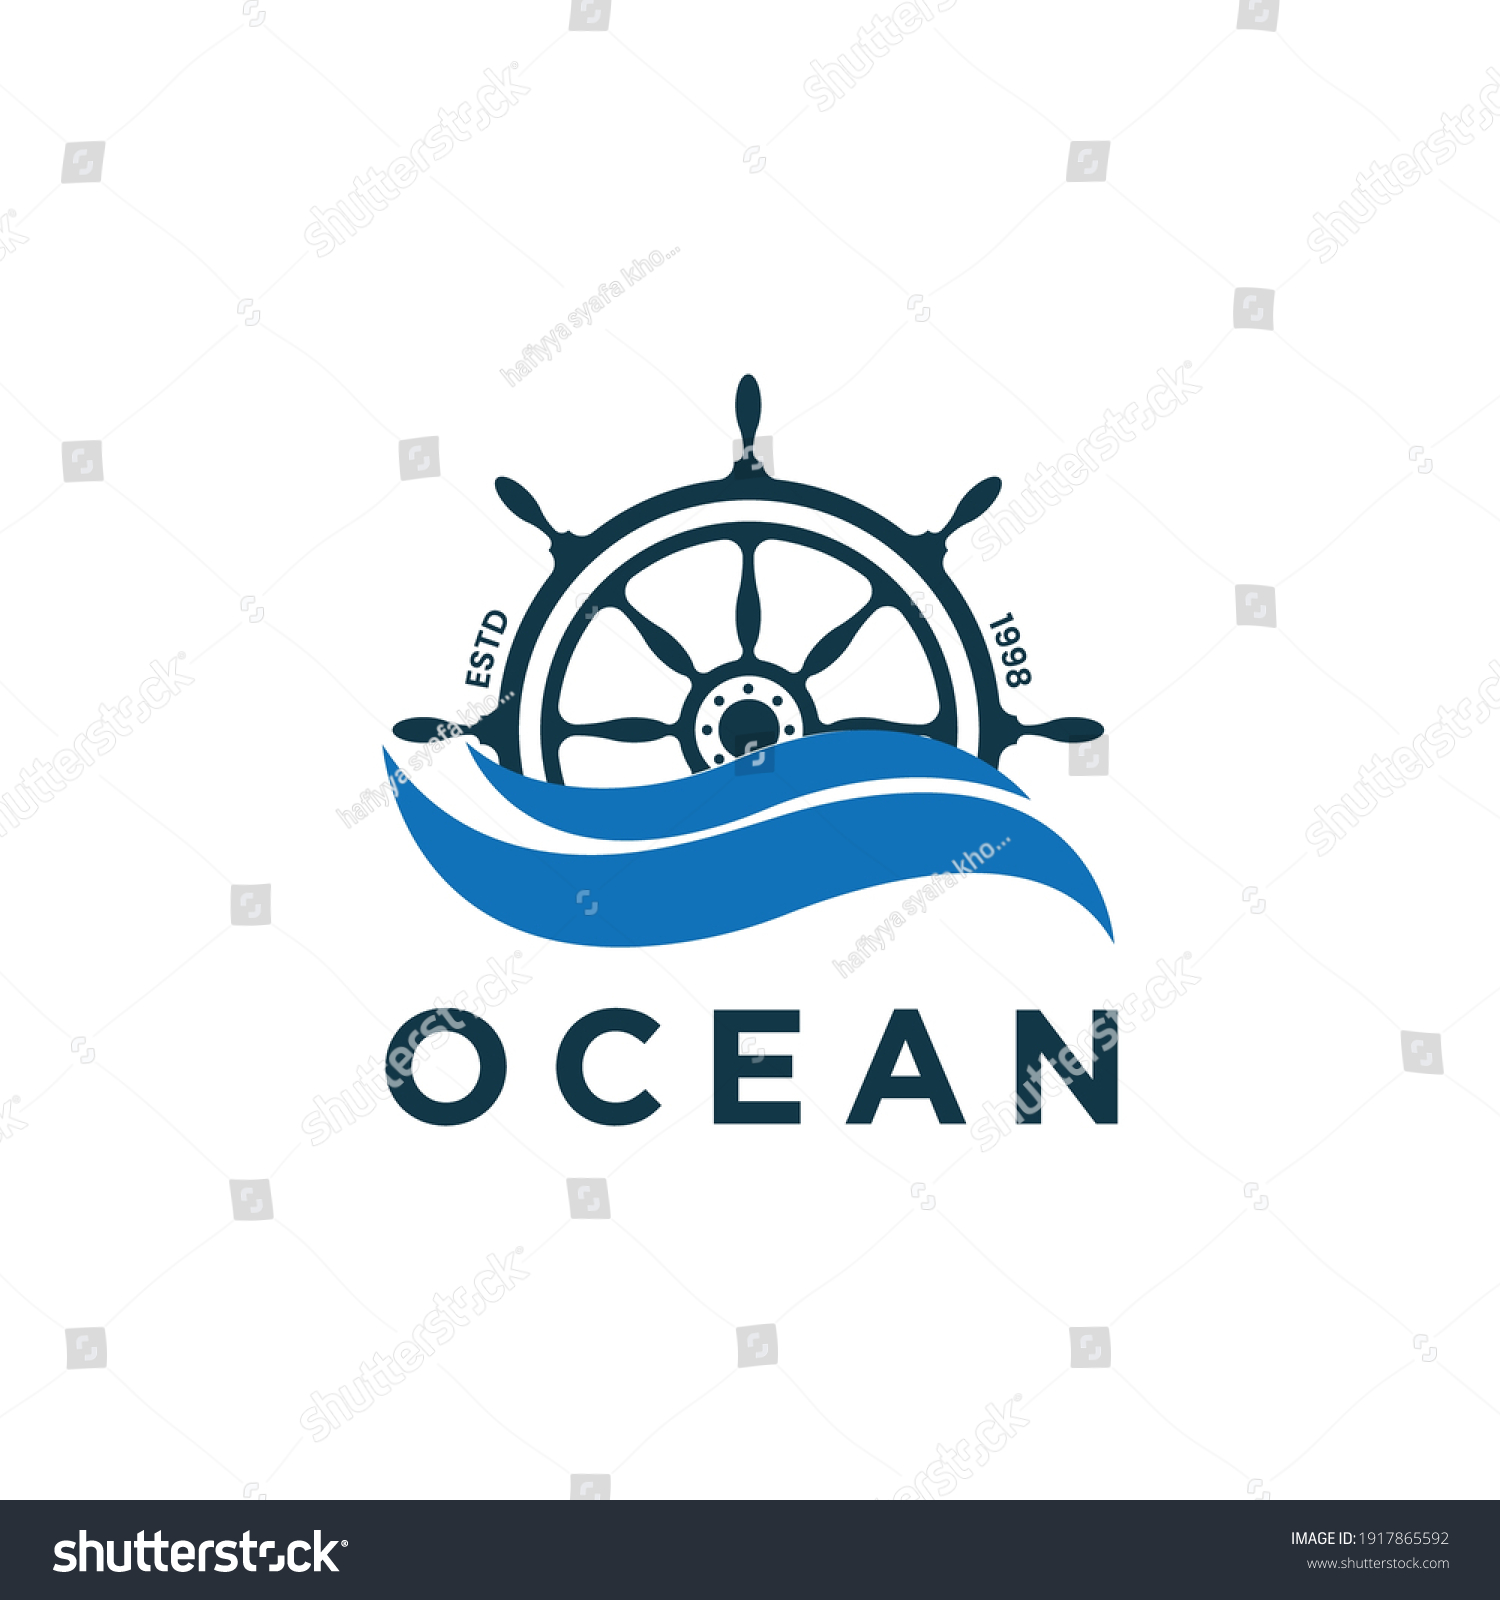 35,803 Ship waves logo Images, Stock Photos & Vectors | Shutterstock